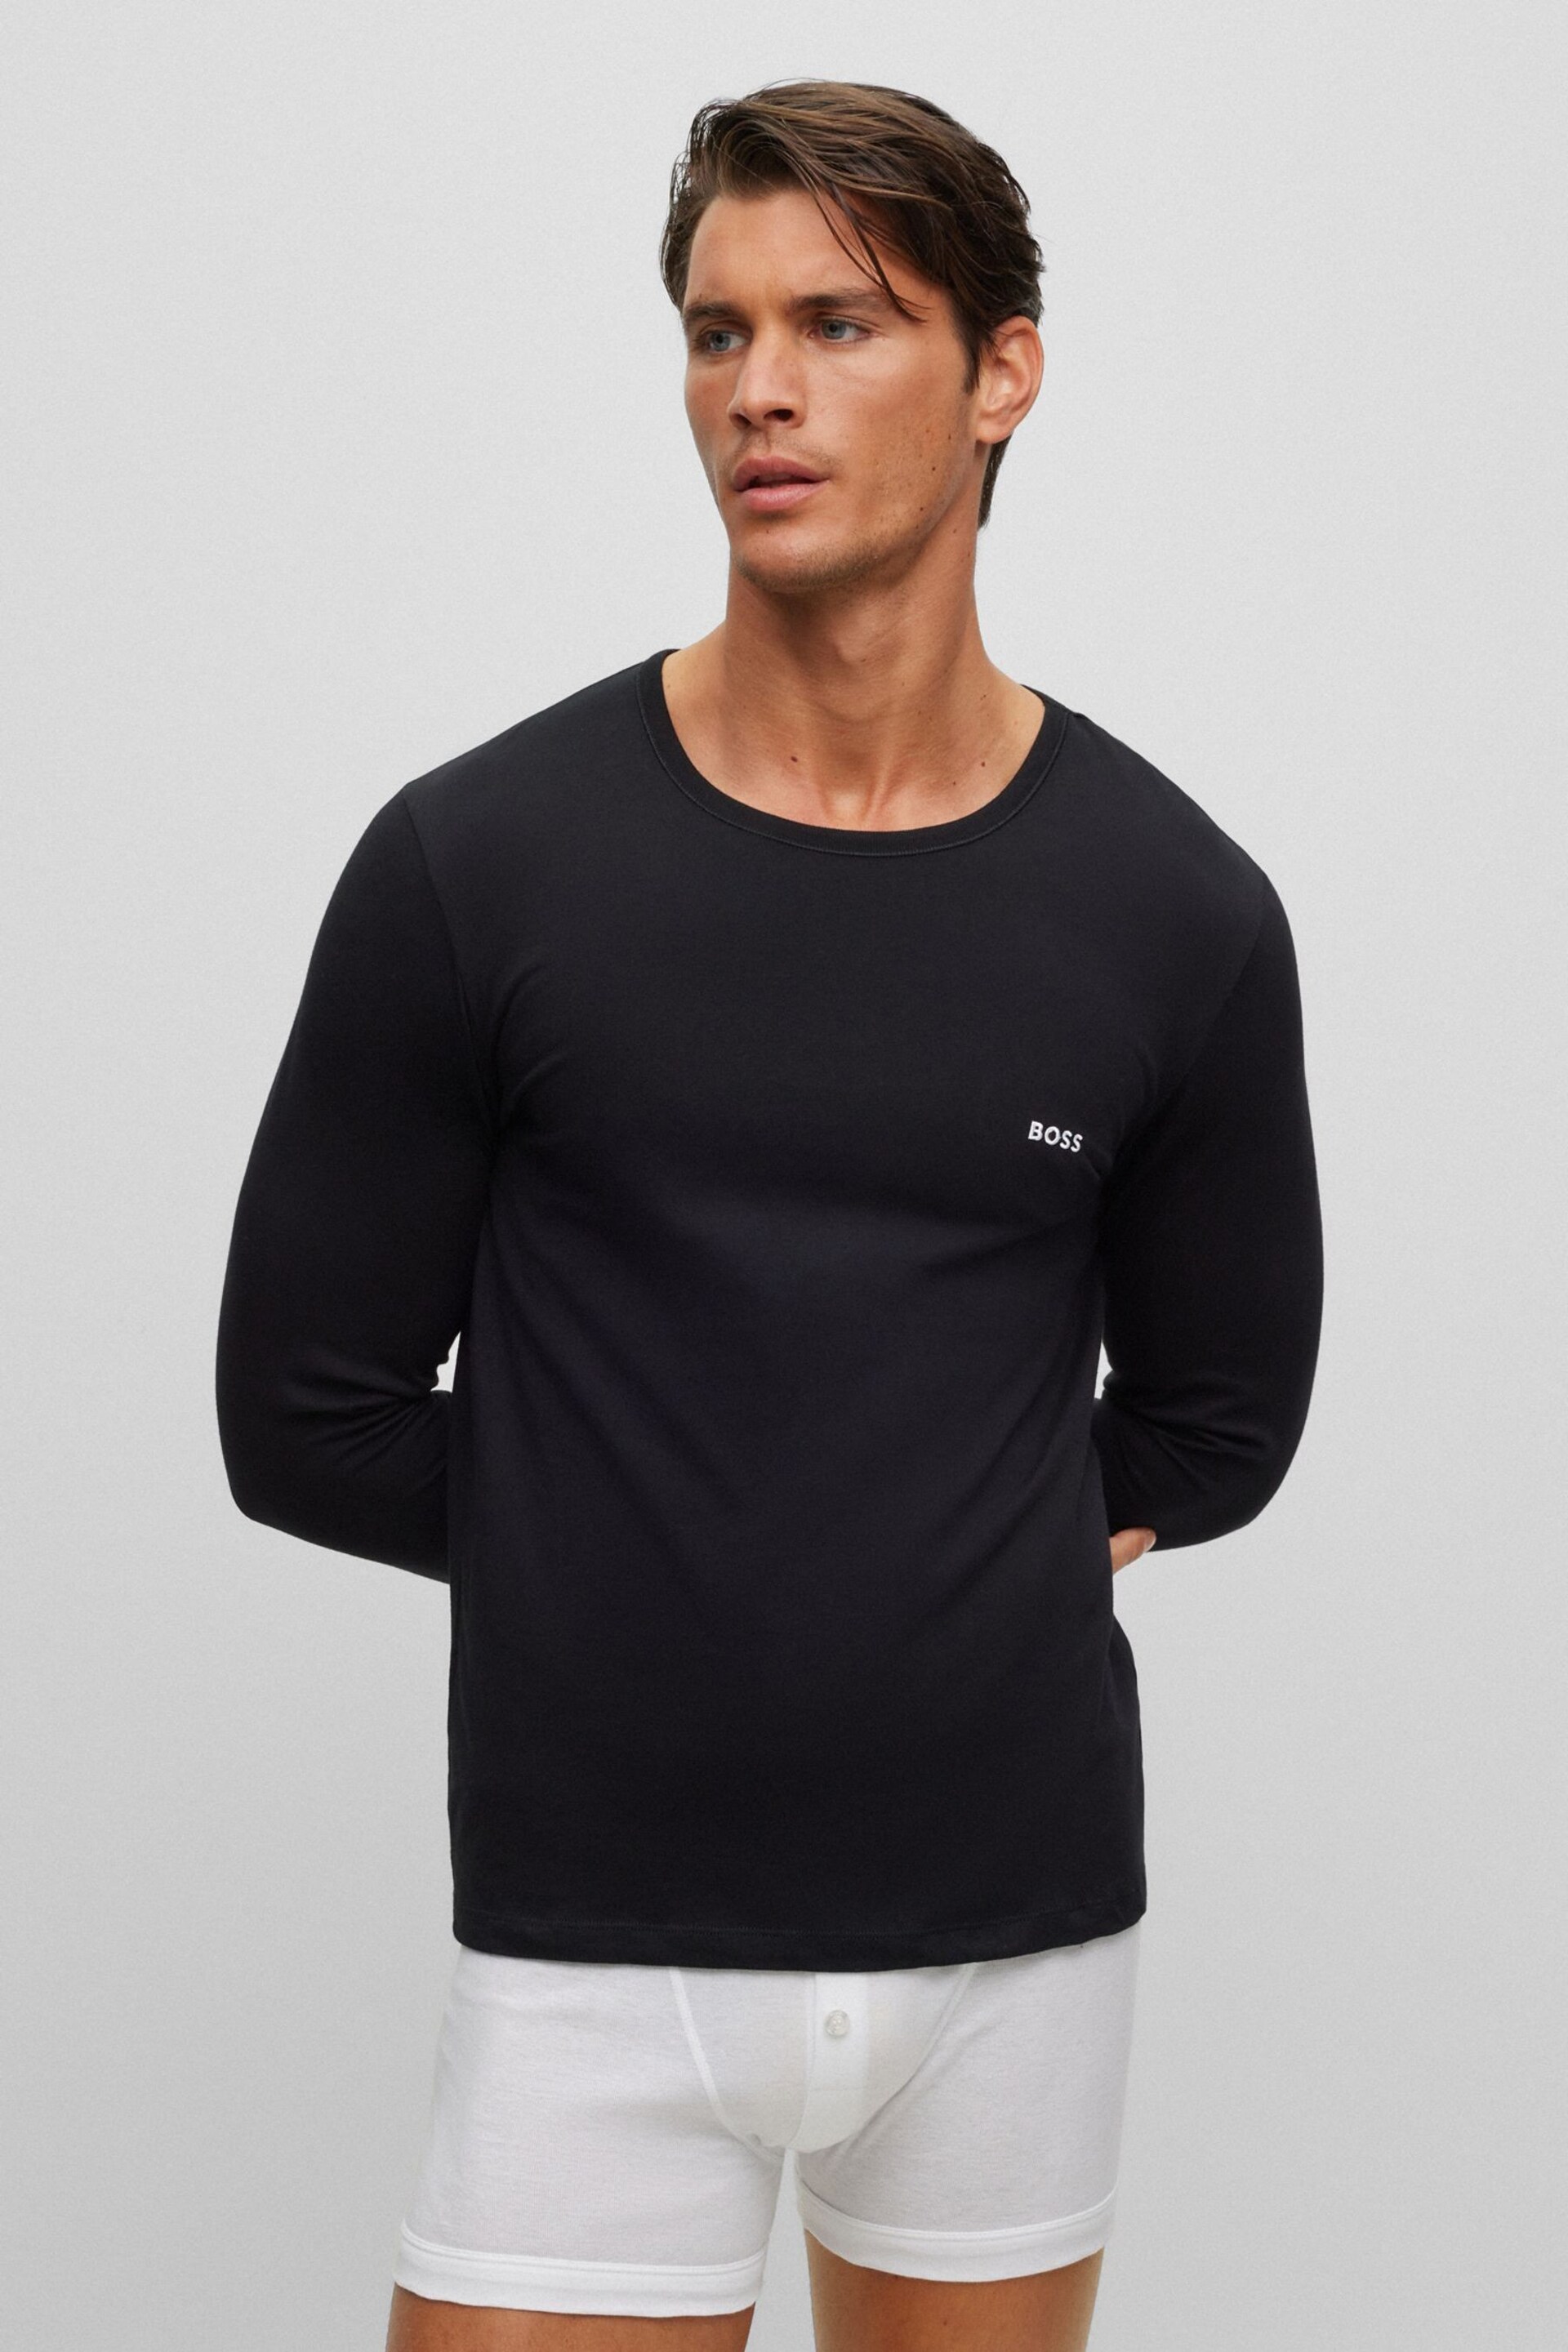 BOSS Black Long Sleeve T-Shirt 3 Pack - Image 6 of 8